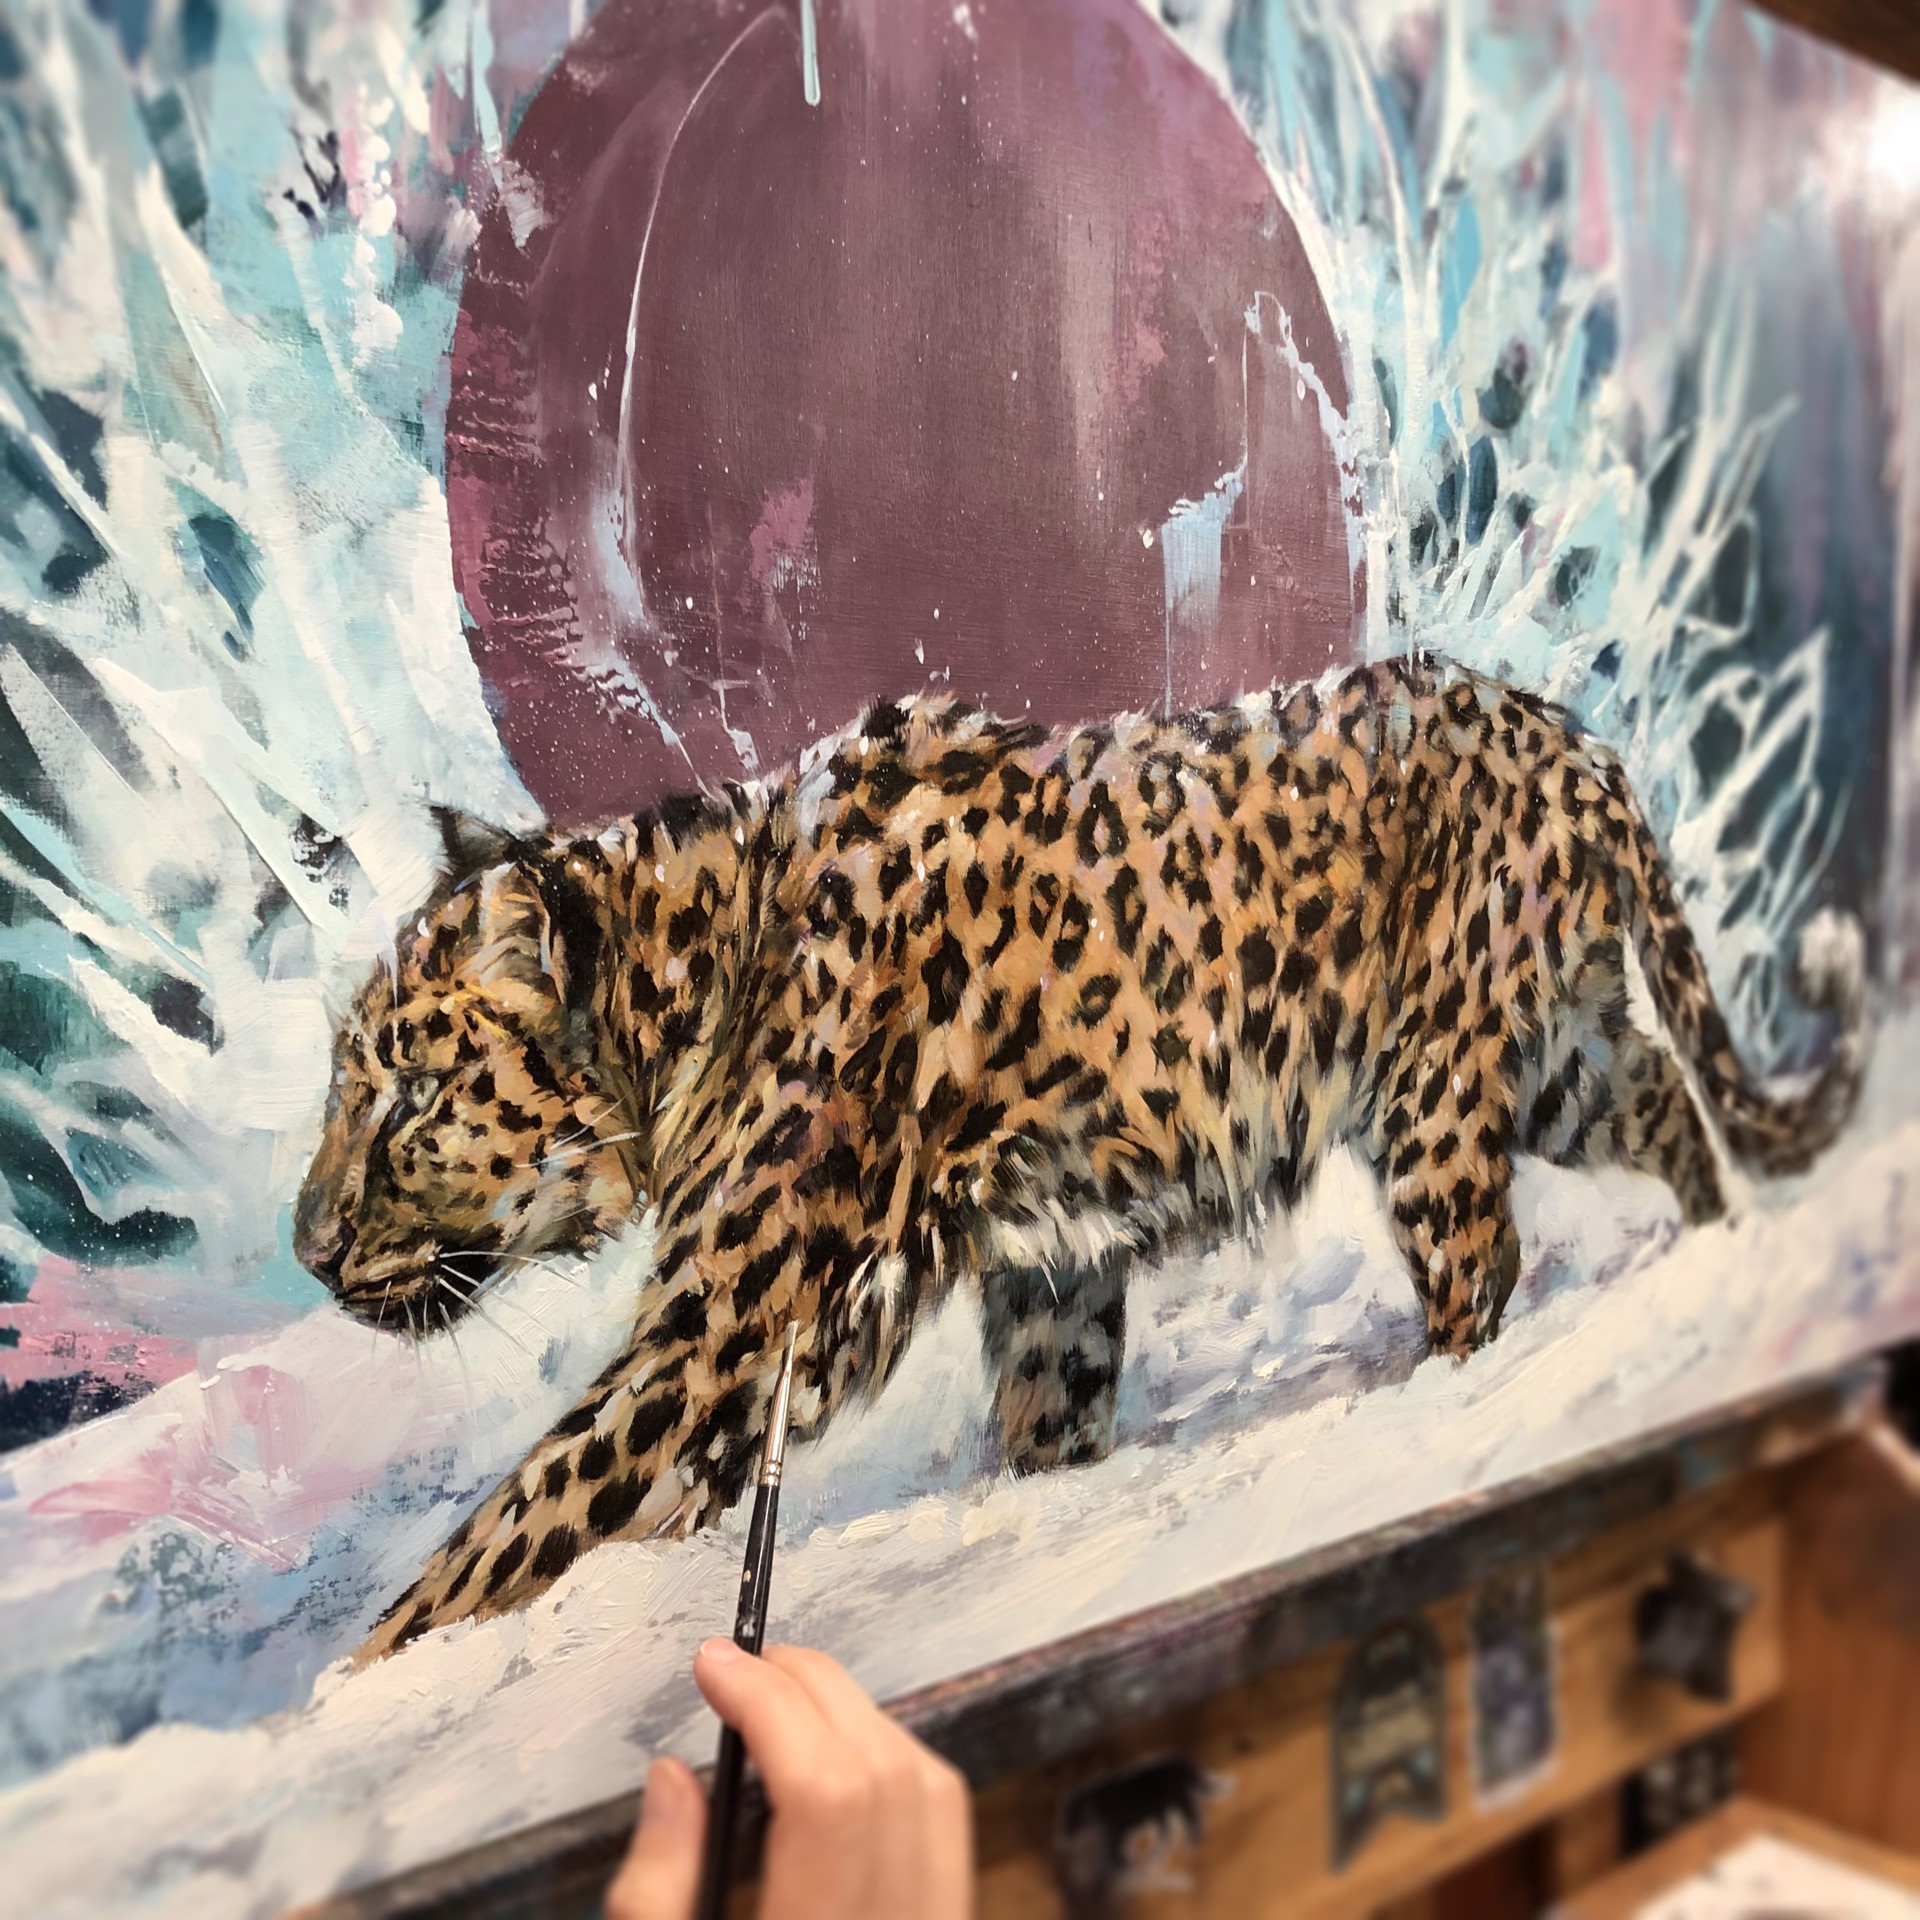 The Amur Leopard by Lindsey Kustusch